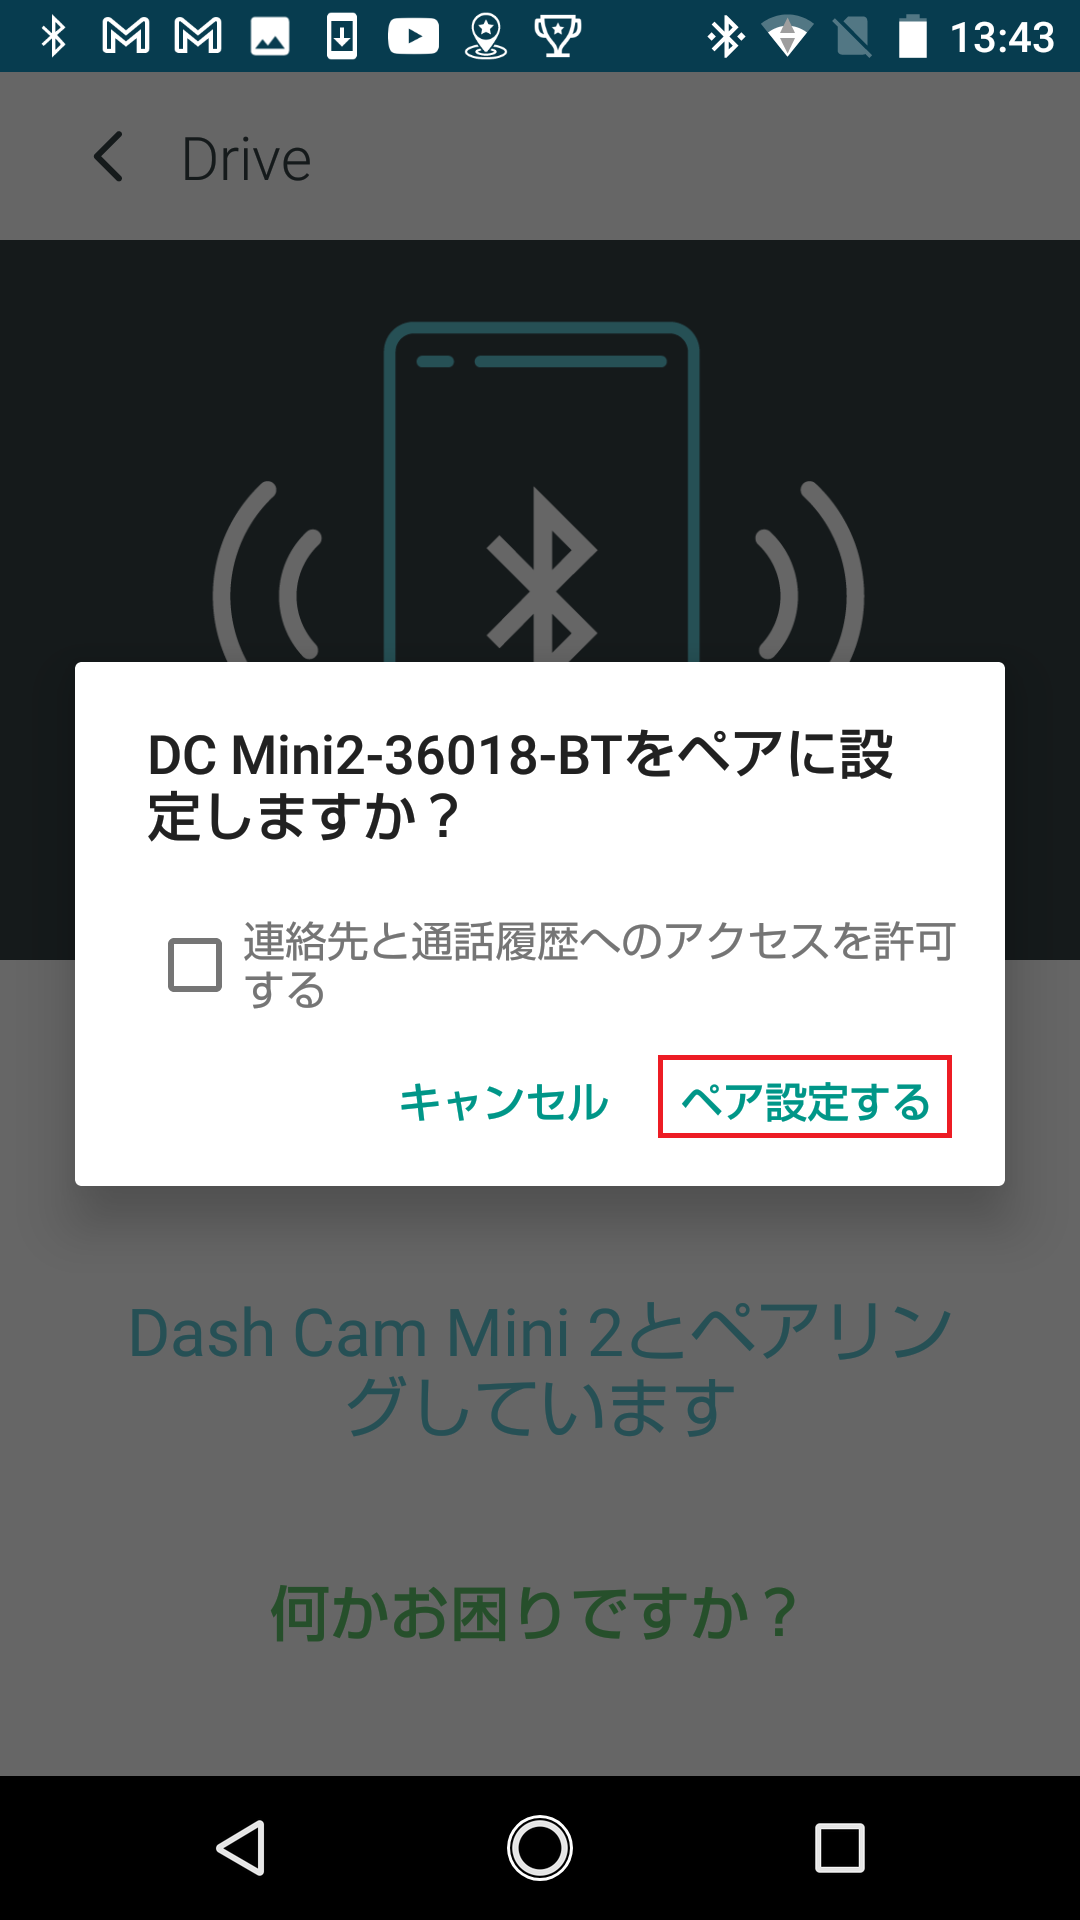 DashCam Mini 2 : GarminDriveAppとペアリングをする | Garmin